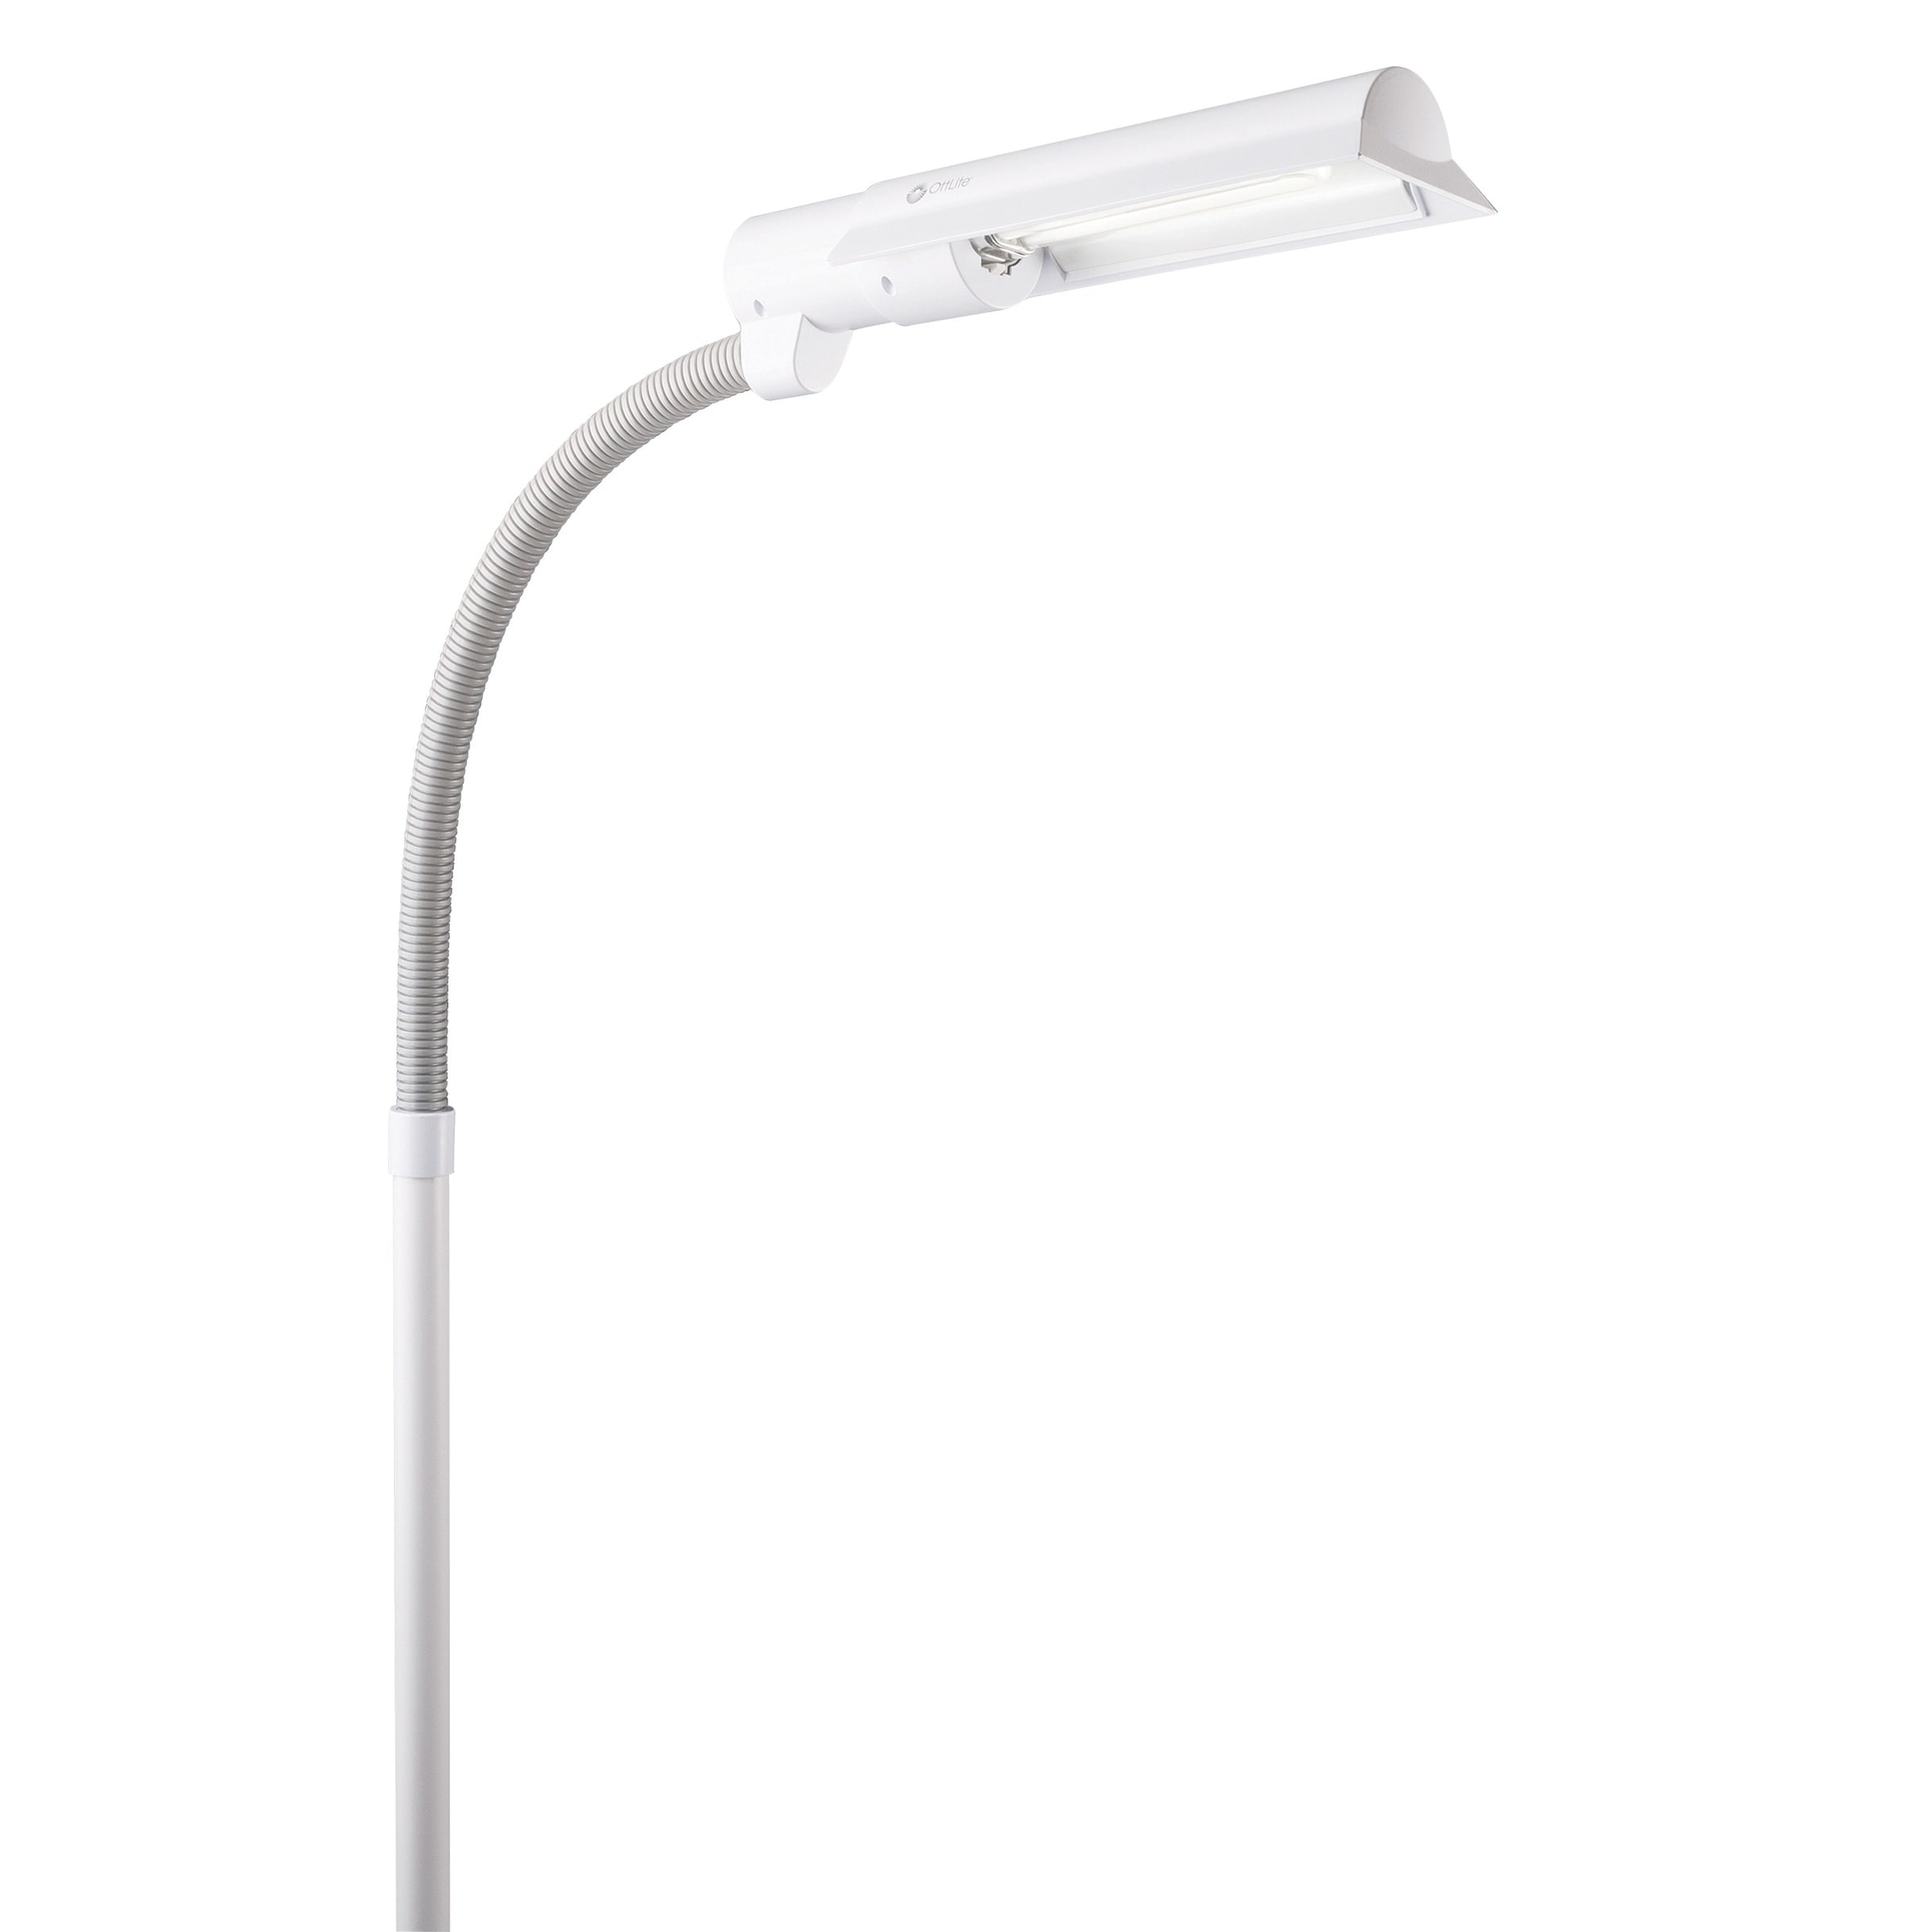 OttLite Floor Lamp with Wheelbase, White - Bed Bath & Beyond